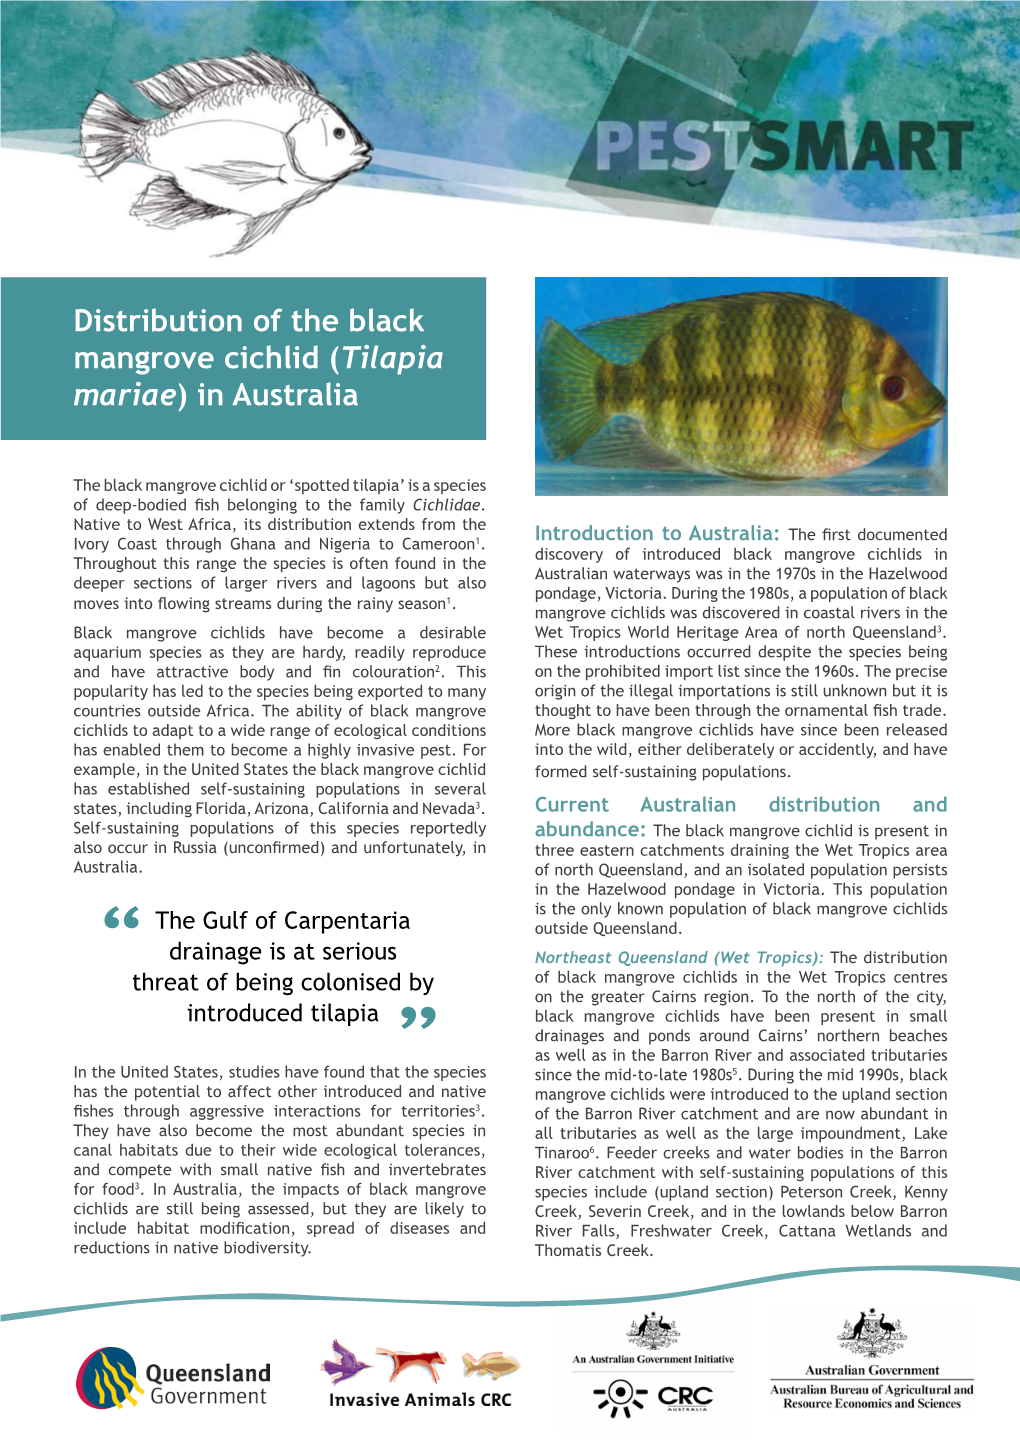 Distribution of the Black Mangrove Cichlid (Tilapia Mariae) in Australia